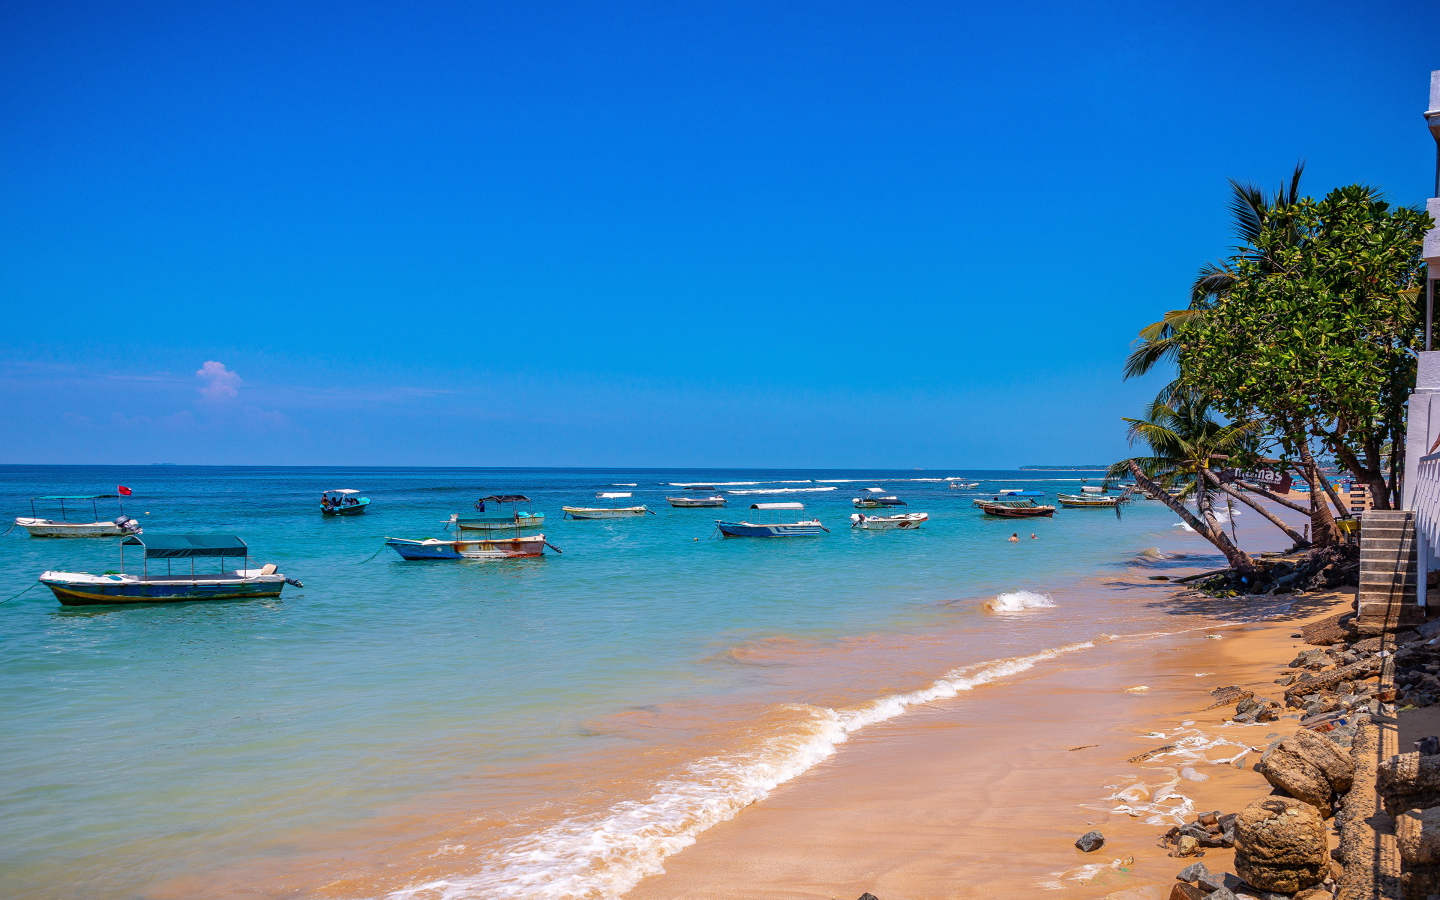 Лодки на берегу тропического пляжа на фоне голубого неба 